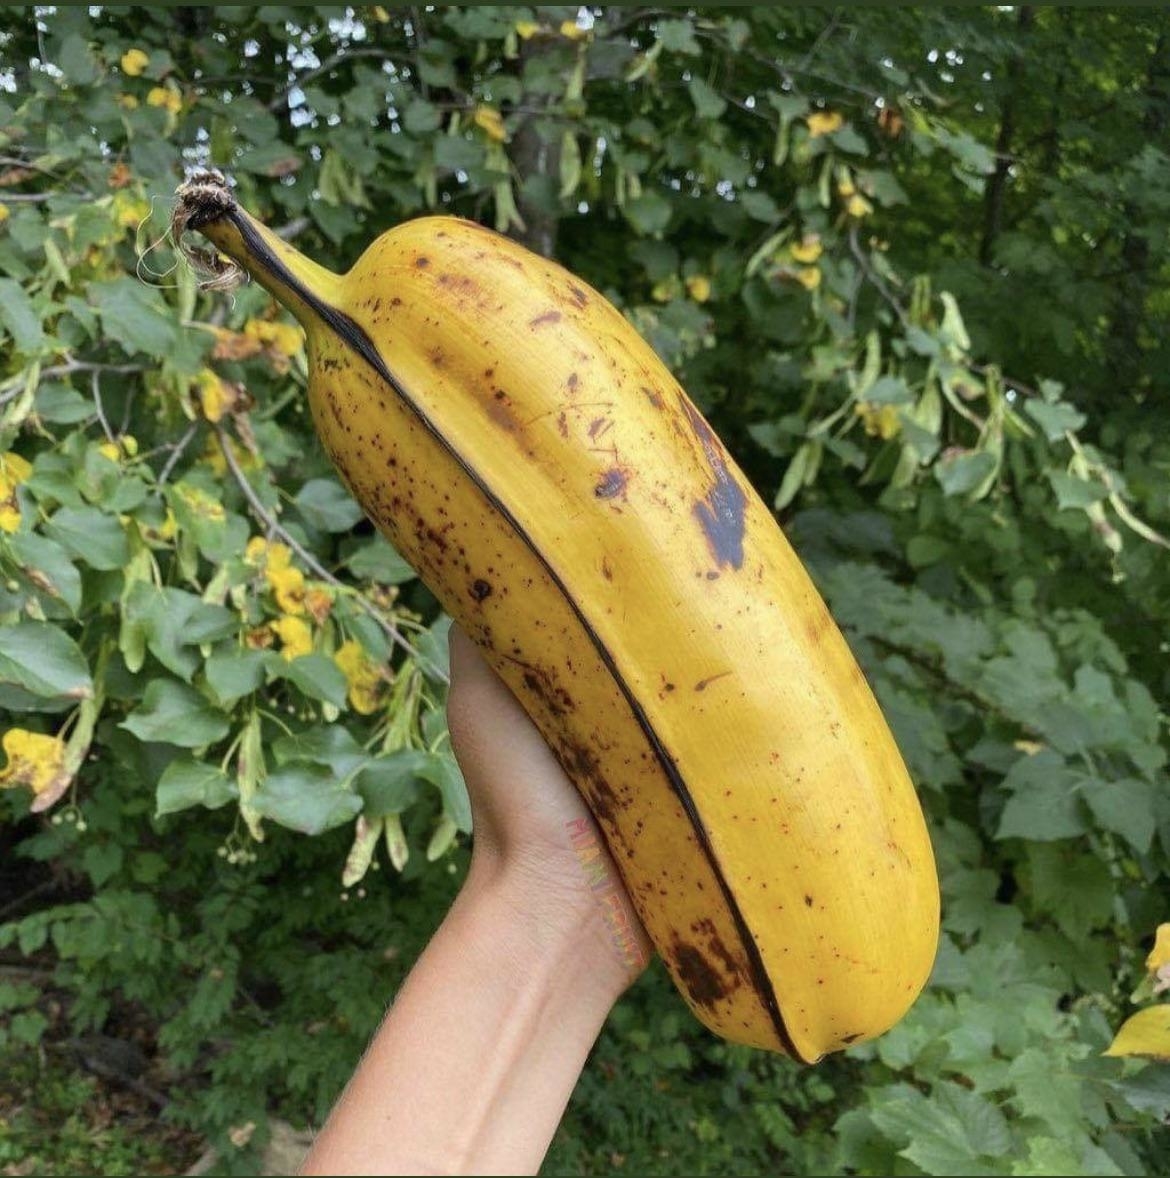 a giant banana